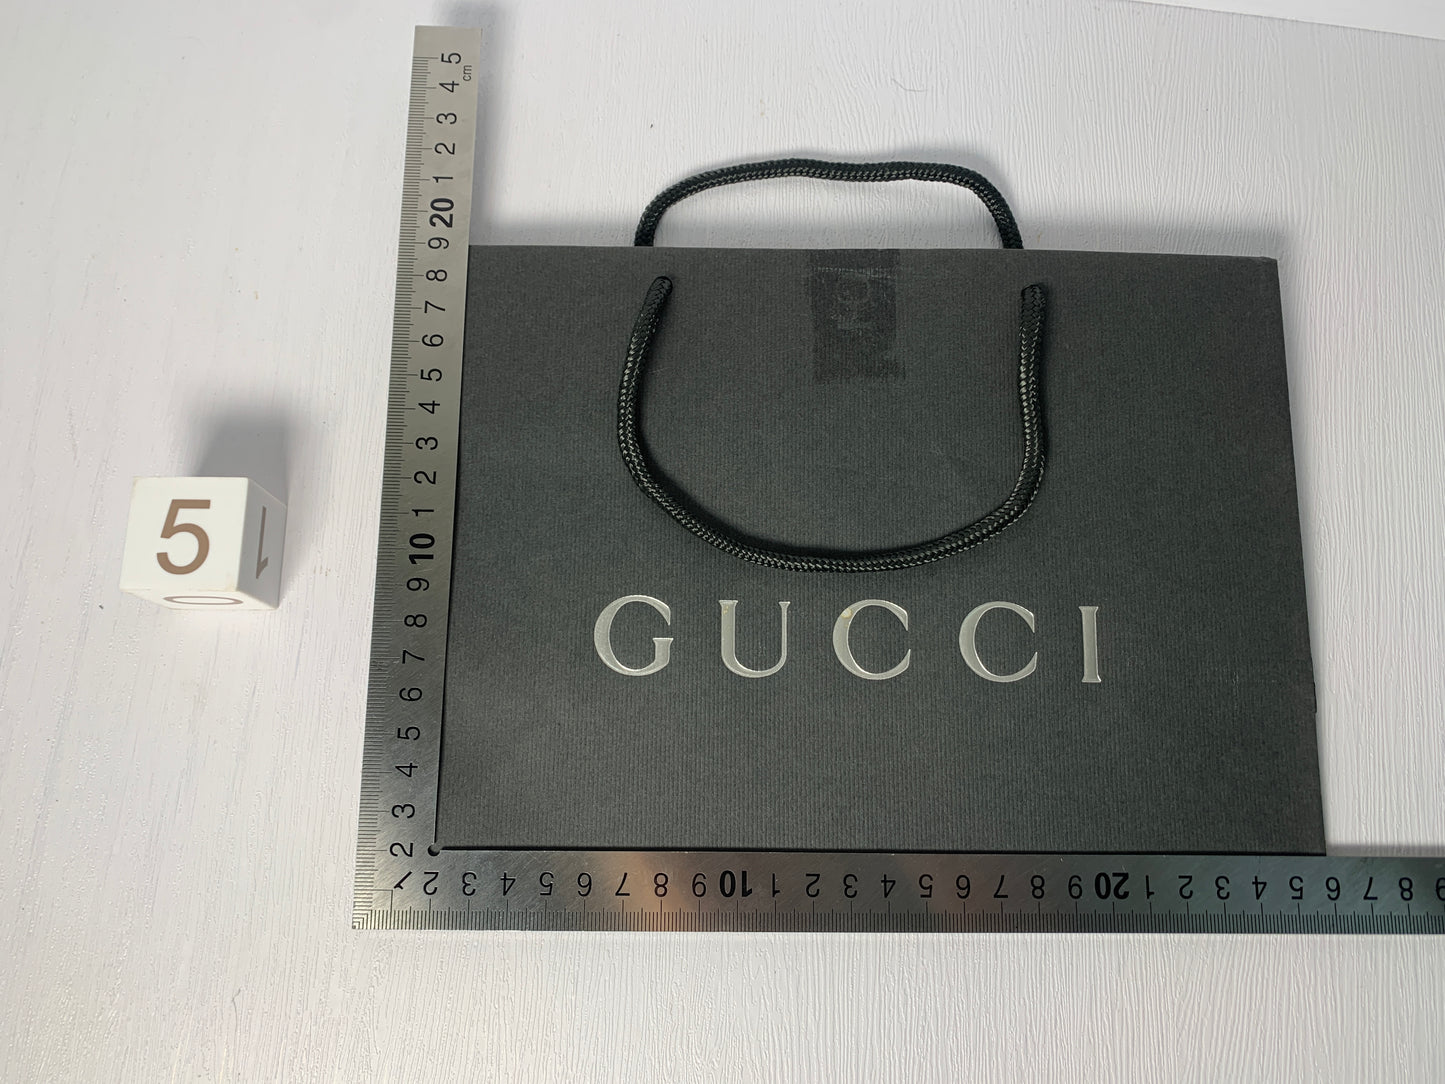 Gucci Paper 